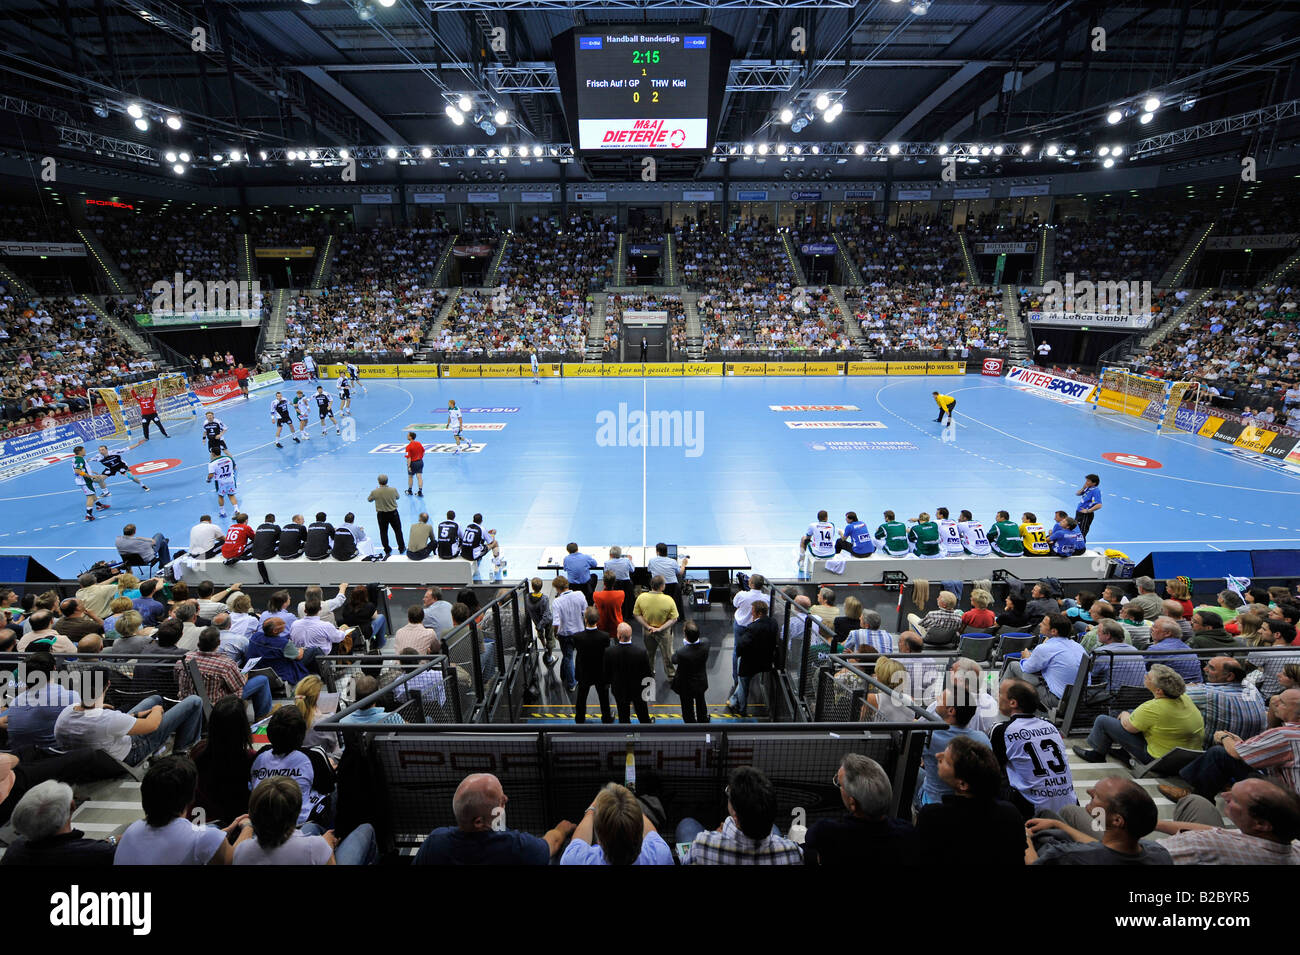 Handball, Porsche Arena, Stuttgart, Baden-Württemberg, Deutschland, Europa  Stockfotografie - Alamy